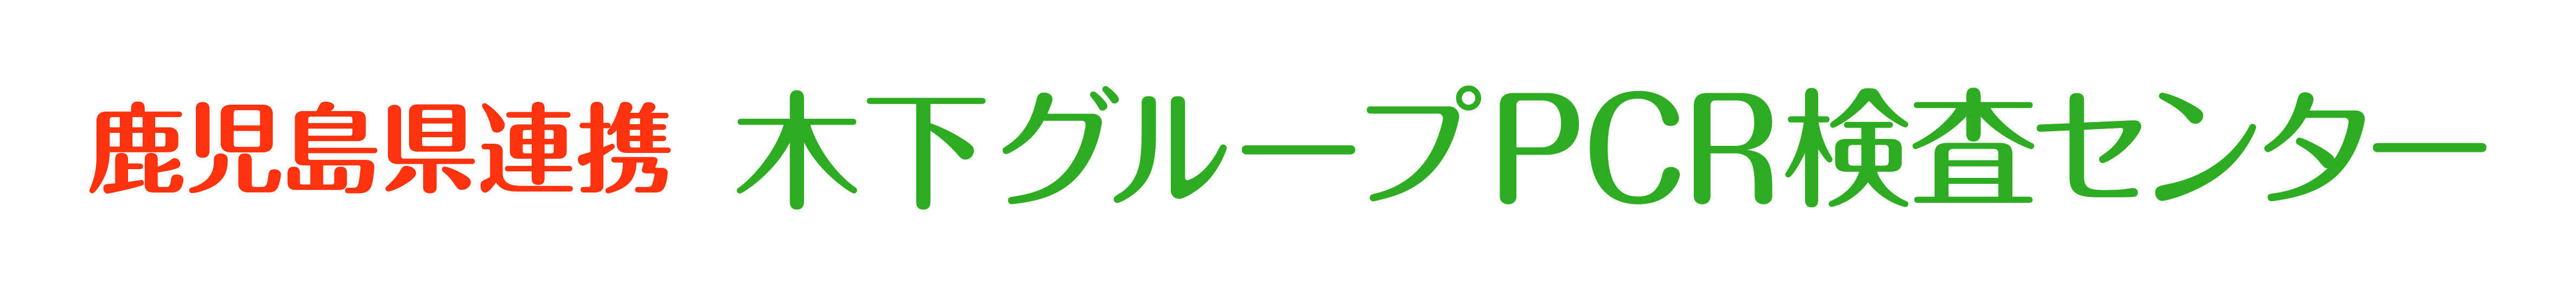 Kagoshima_ap_Logo_B.jpg